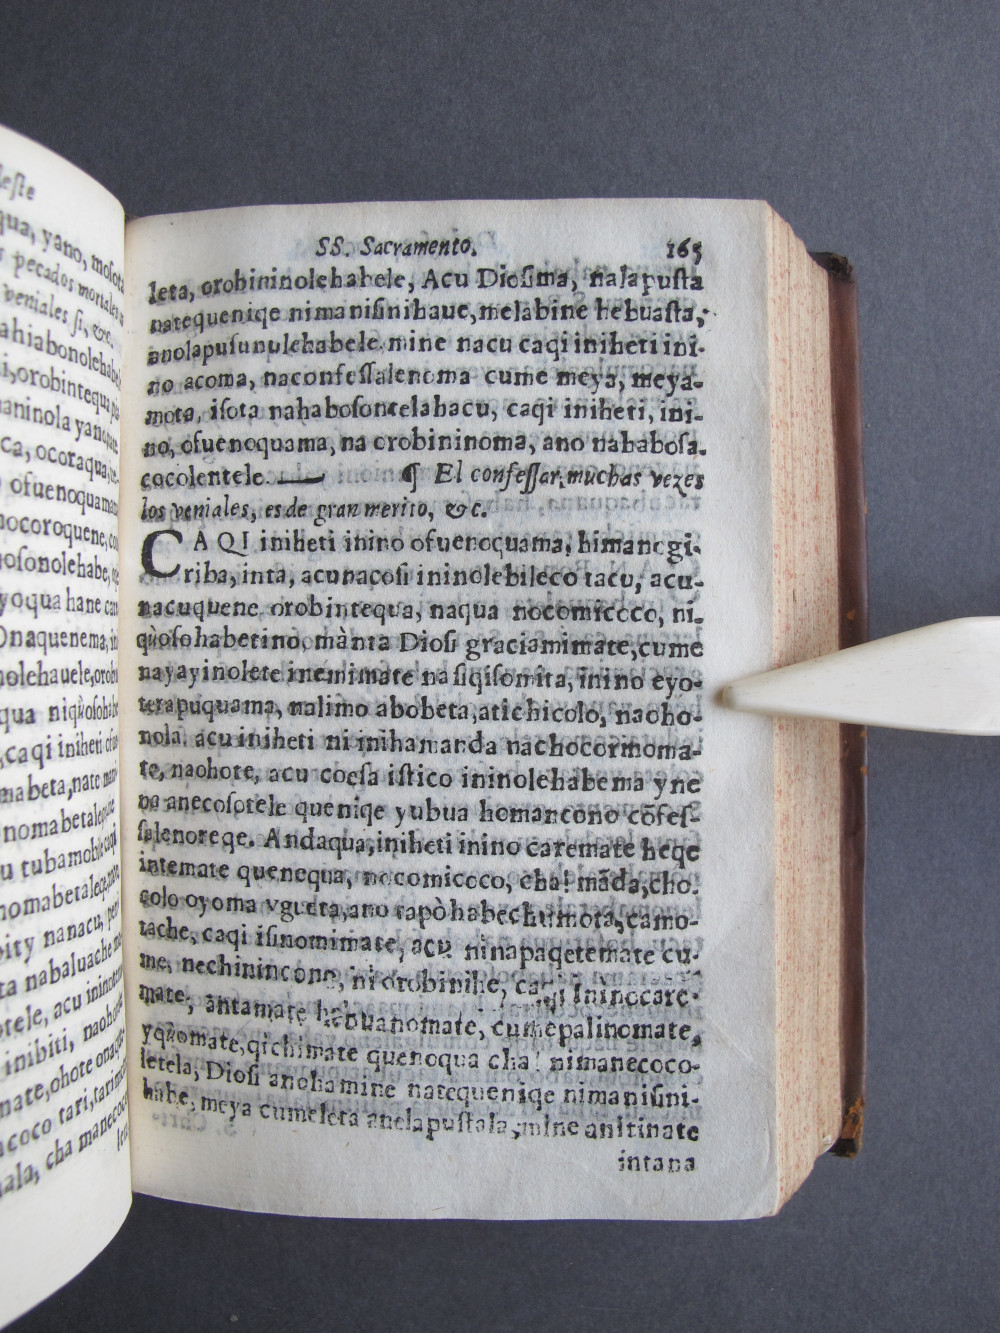 Folio X8 recto